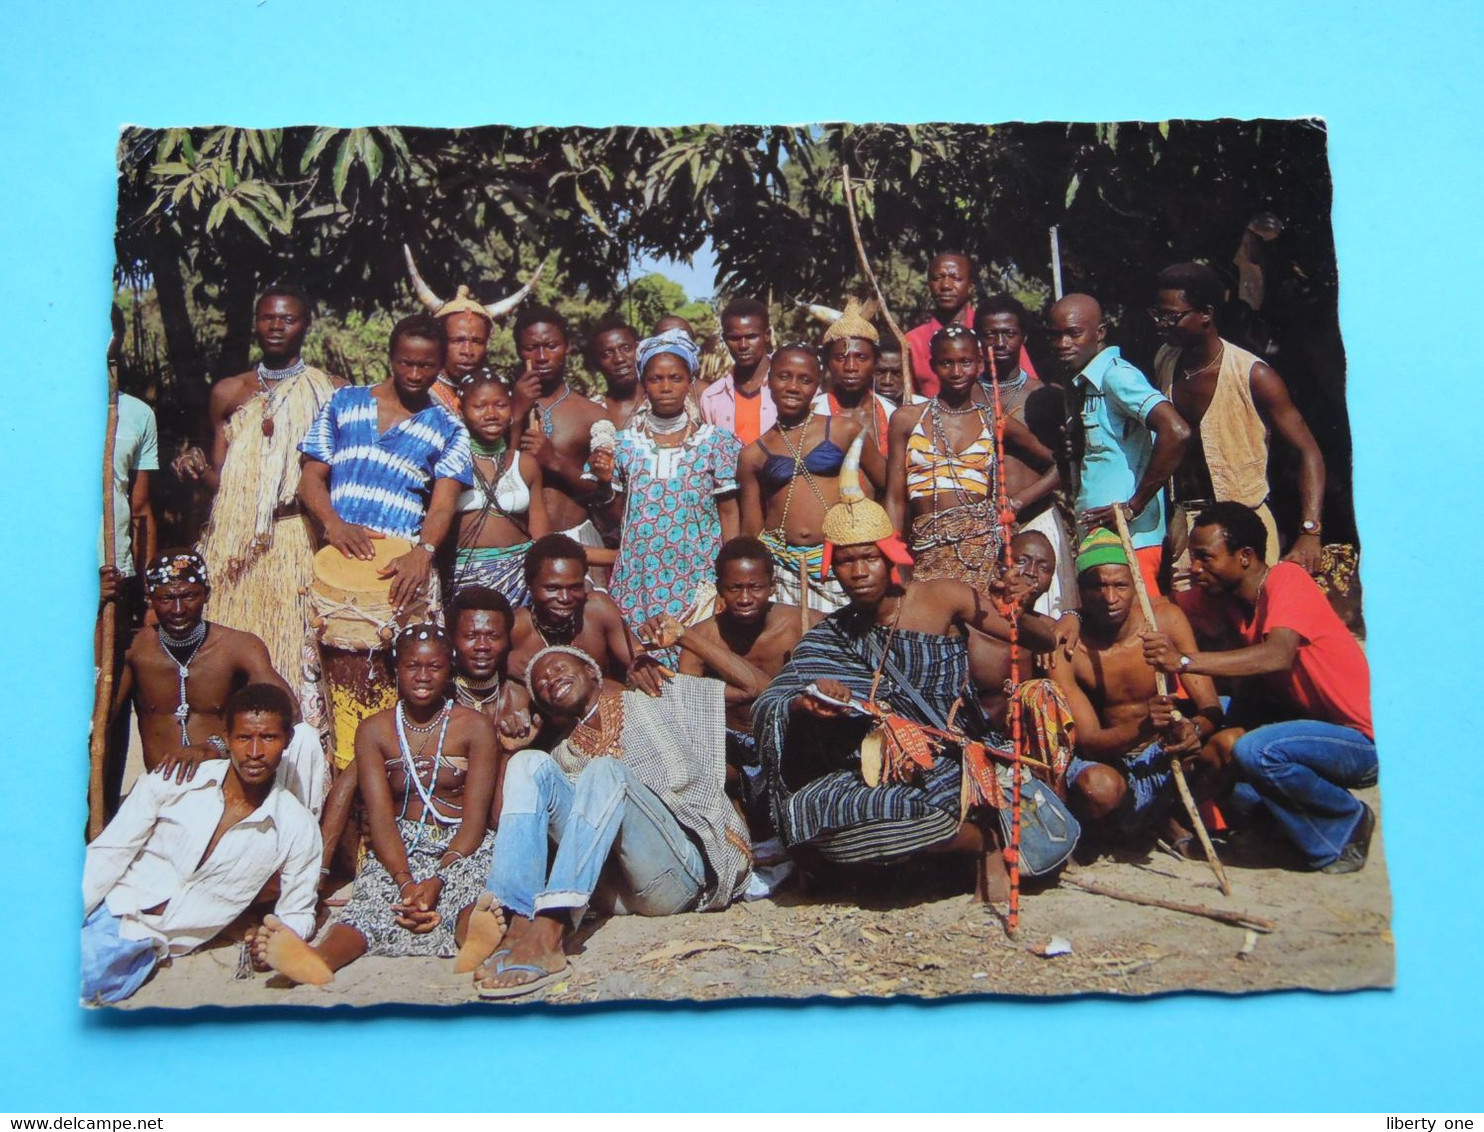 The GAMBIA West Africa ( Edit. Peter Fenz ) Anno 1983 ( Zie / Voir Scan ) ! - Gambie